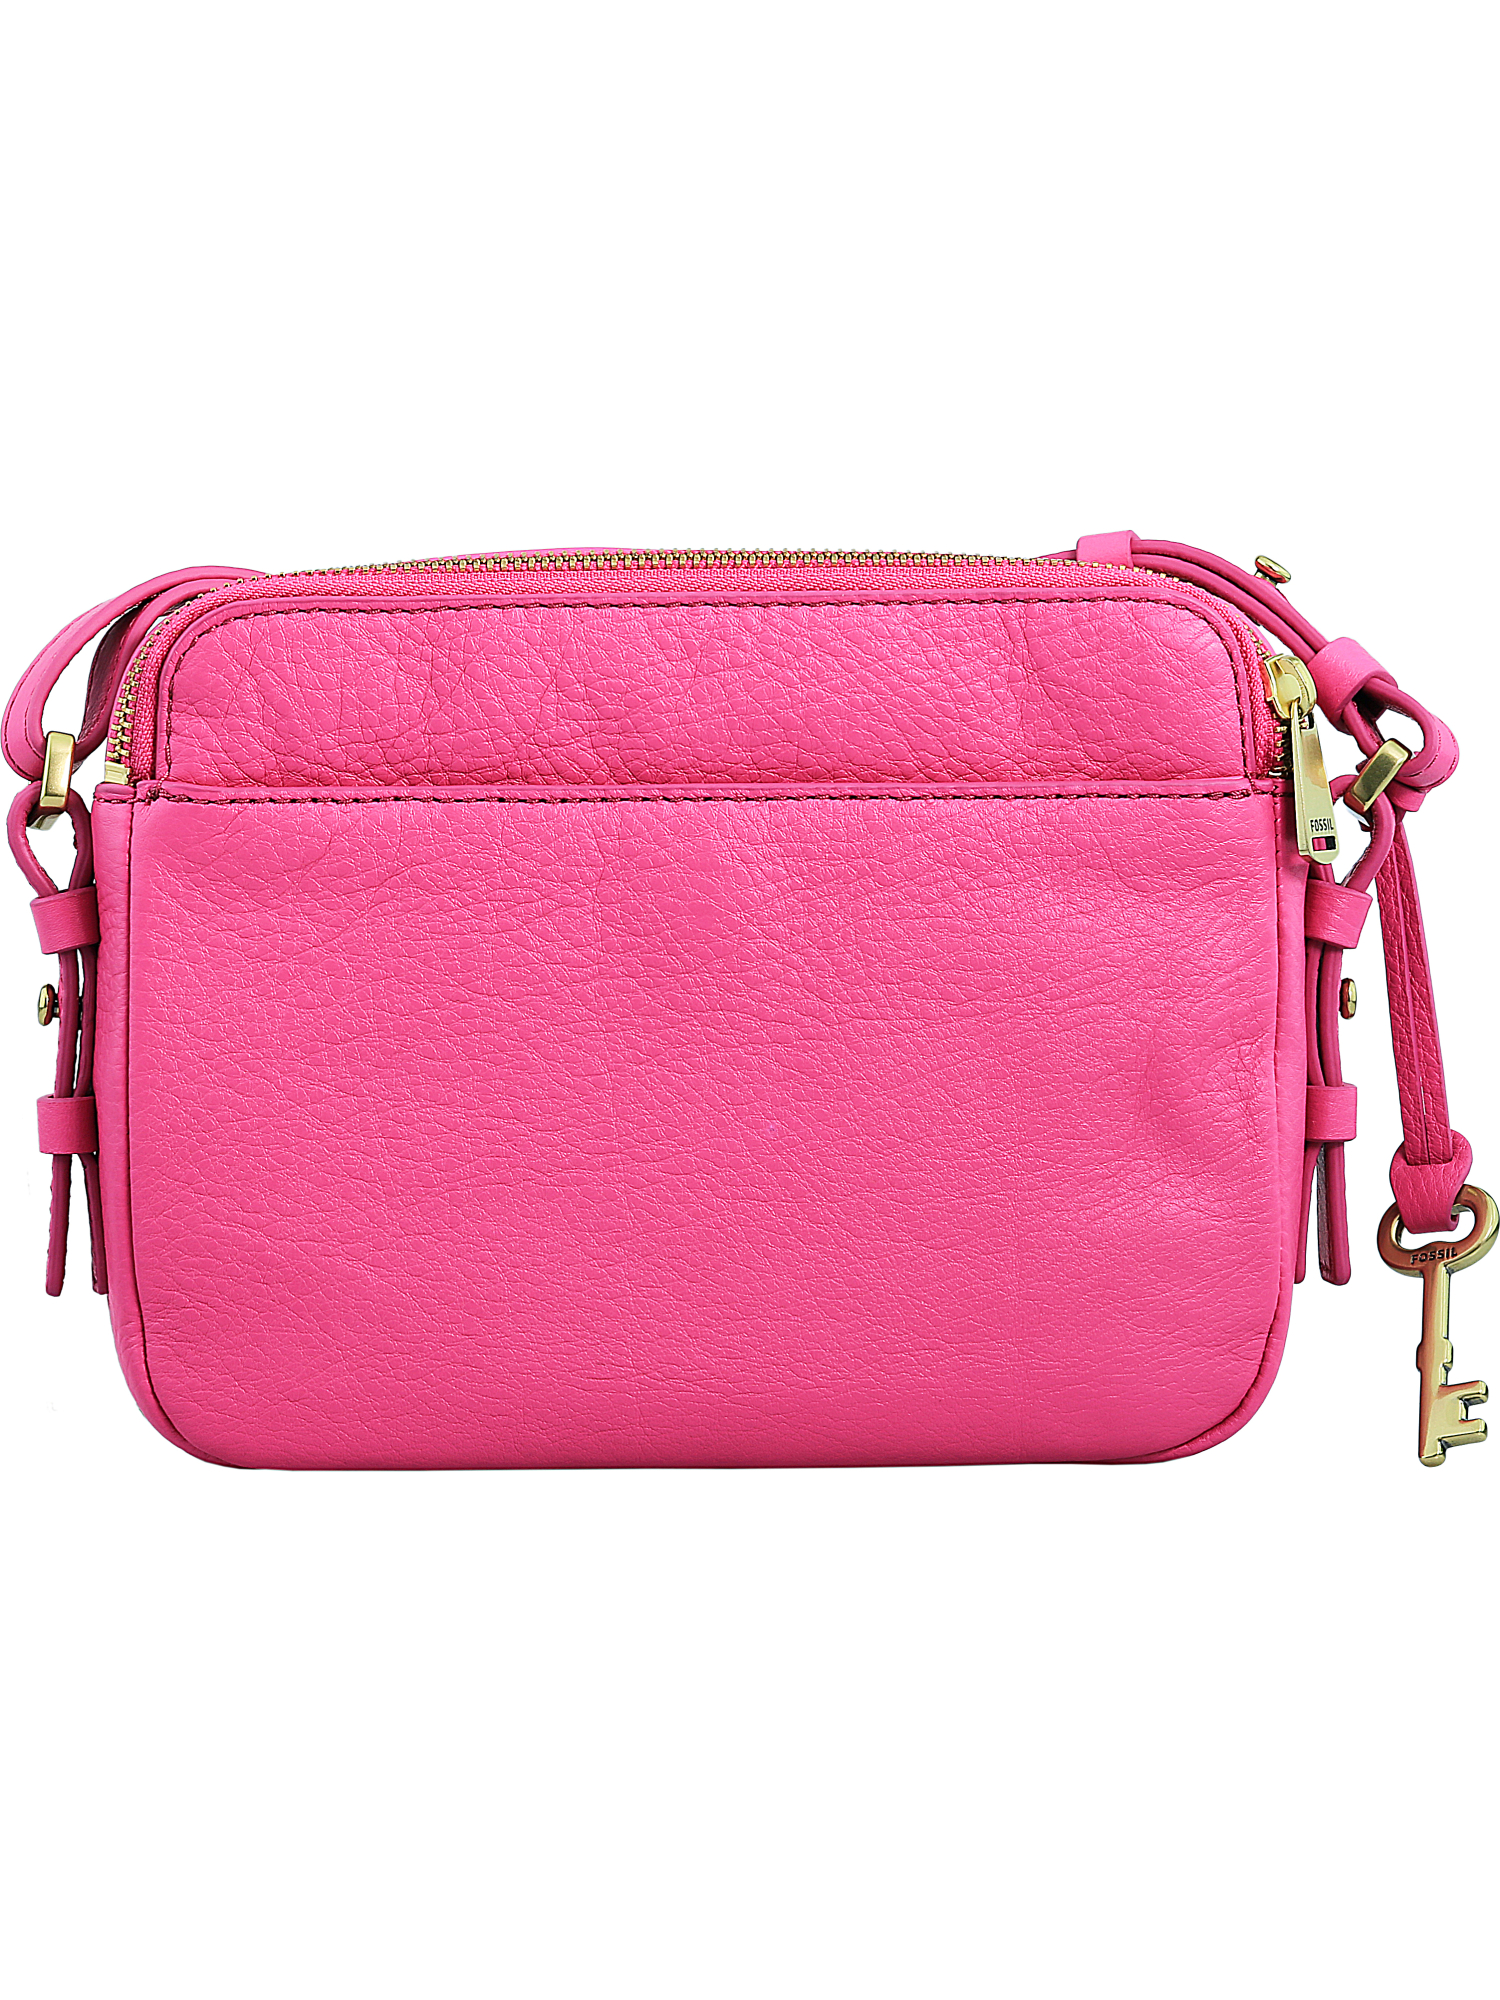 Fossil Zb6865 &quot;piper Crossbody&quot; Top ZIPPER Hot Pink Leather Hand Bag ZB6865694 | eBay